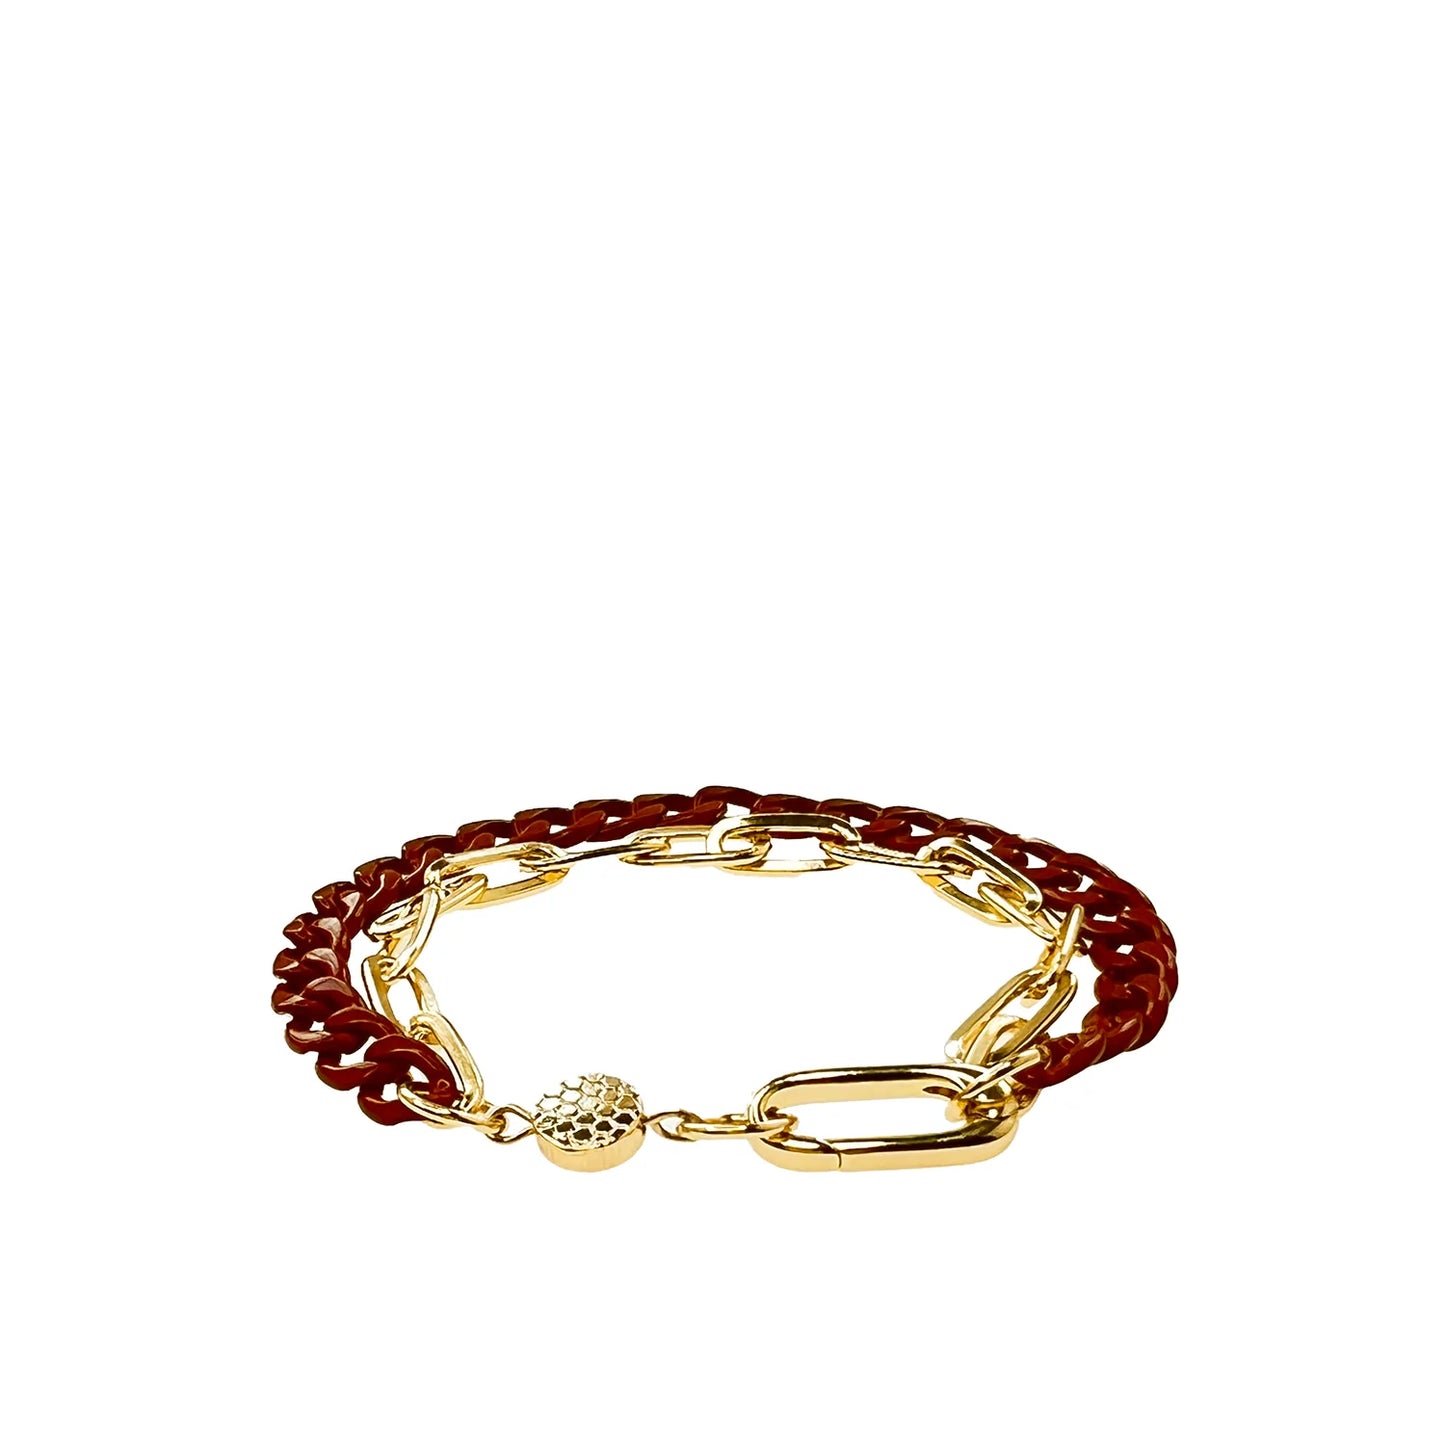 double link oval hinge clasp bracelet